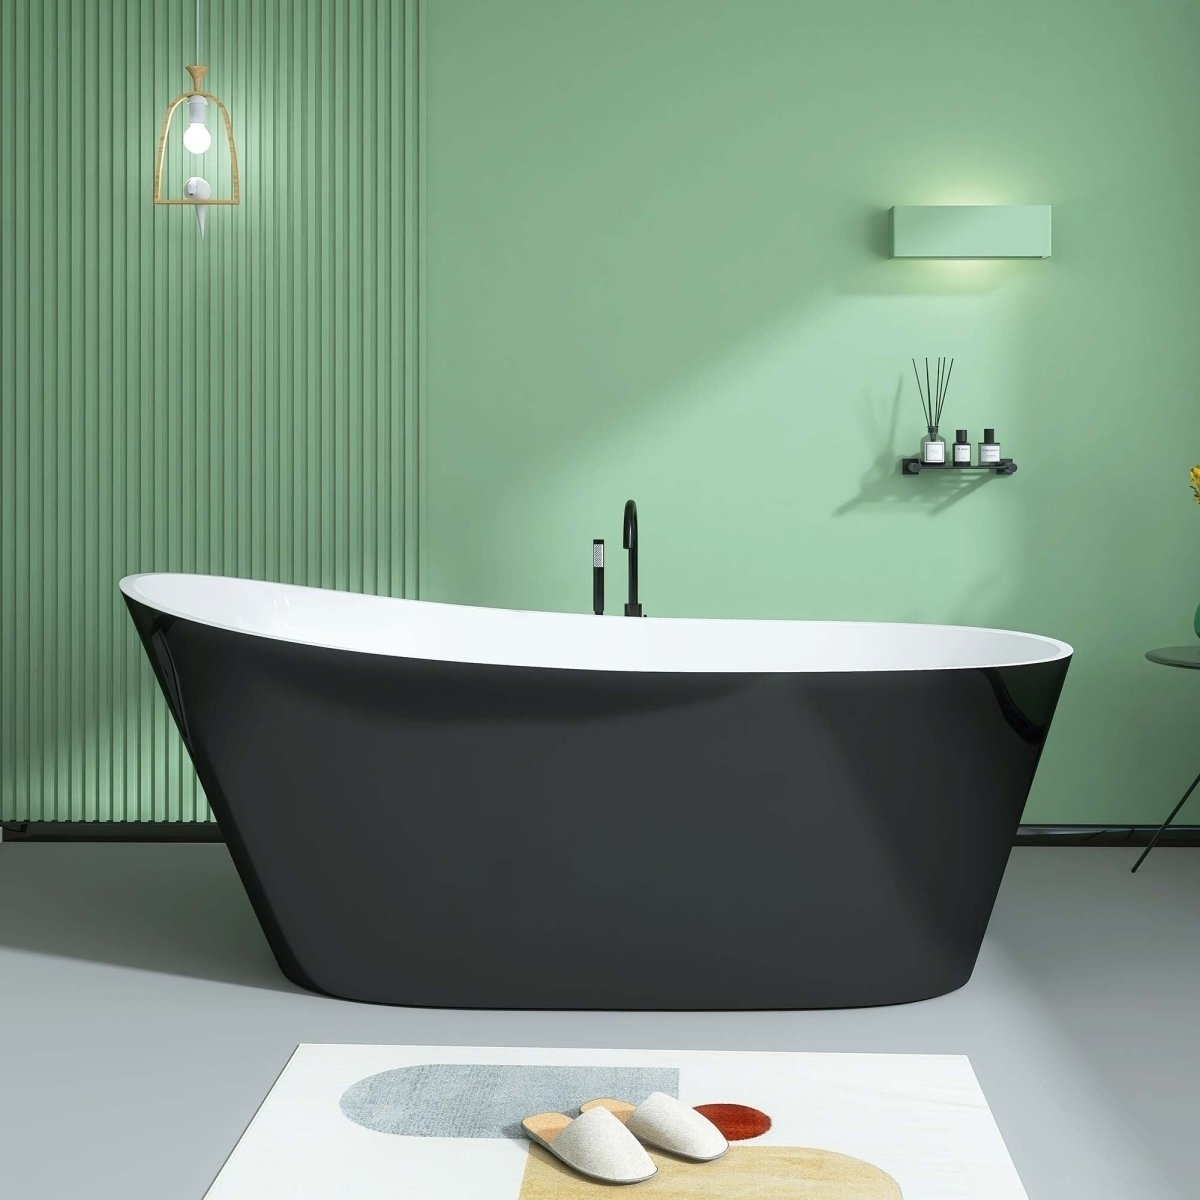 ExBrite Bathtub 59 Acrylic Free Standing Tub Classic Oval Shape Soaking Tub, Adjustable Freestanding Black